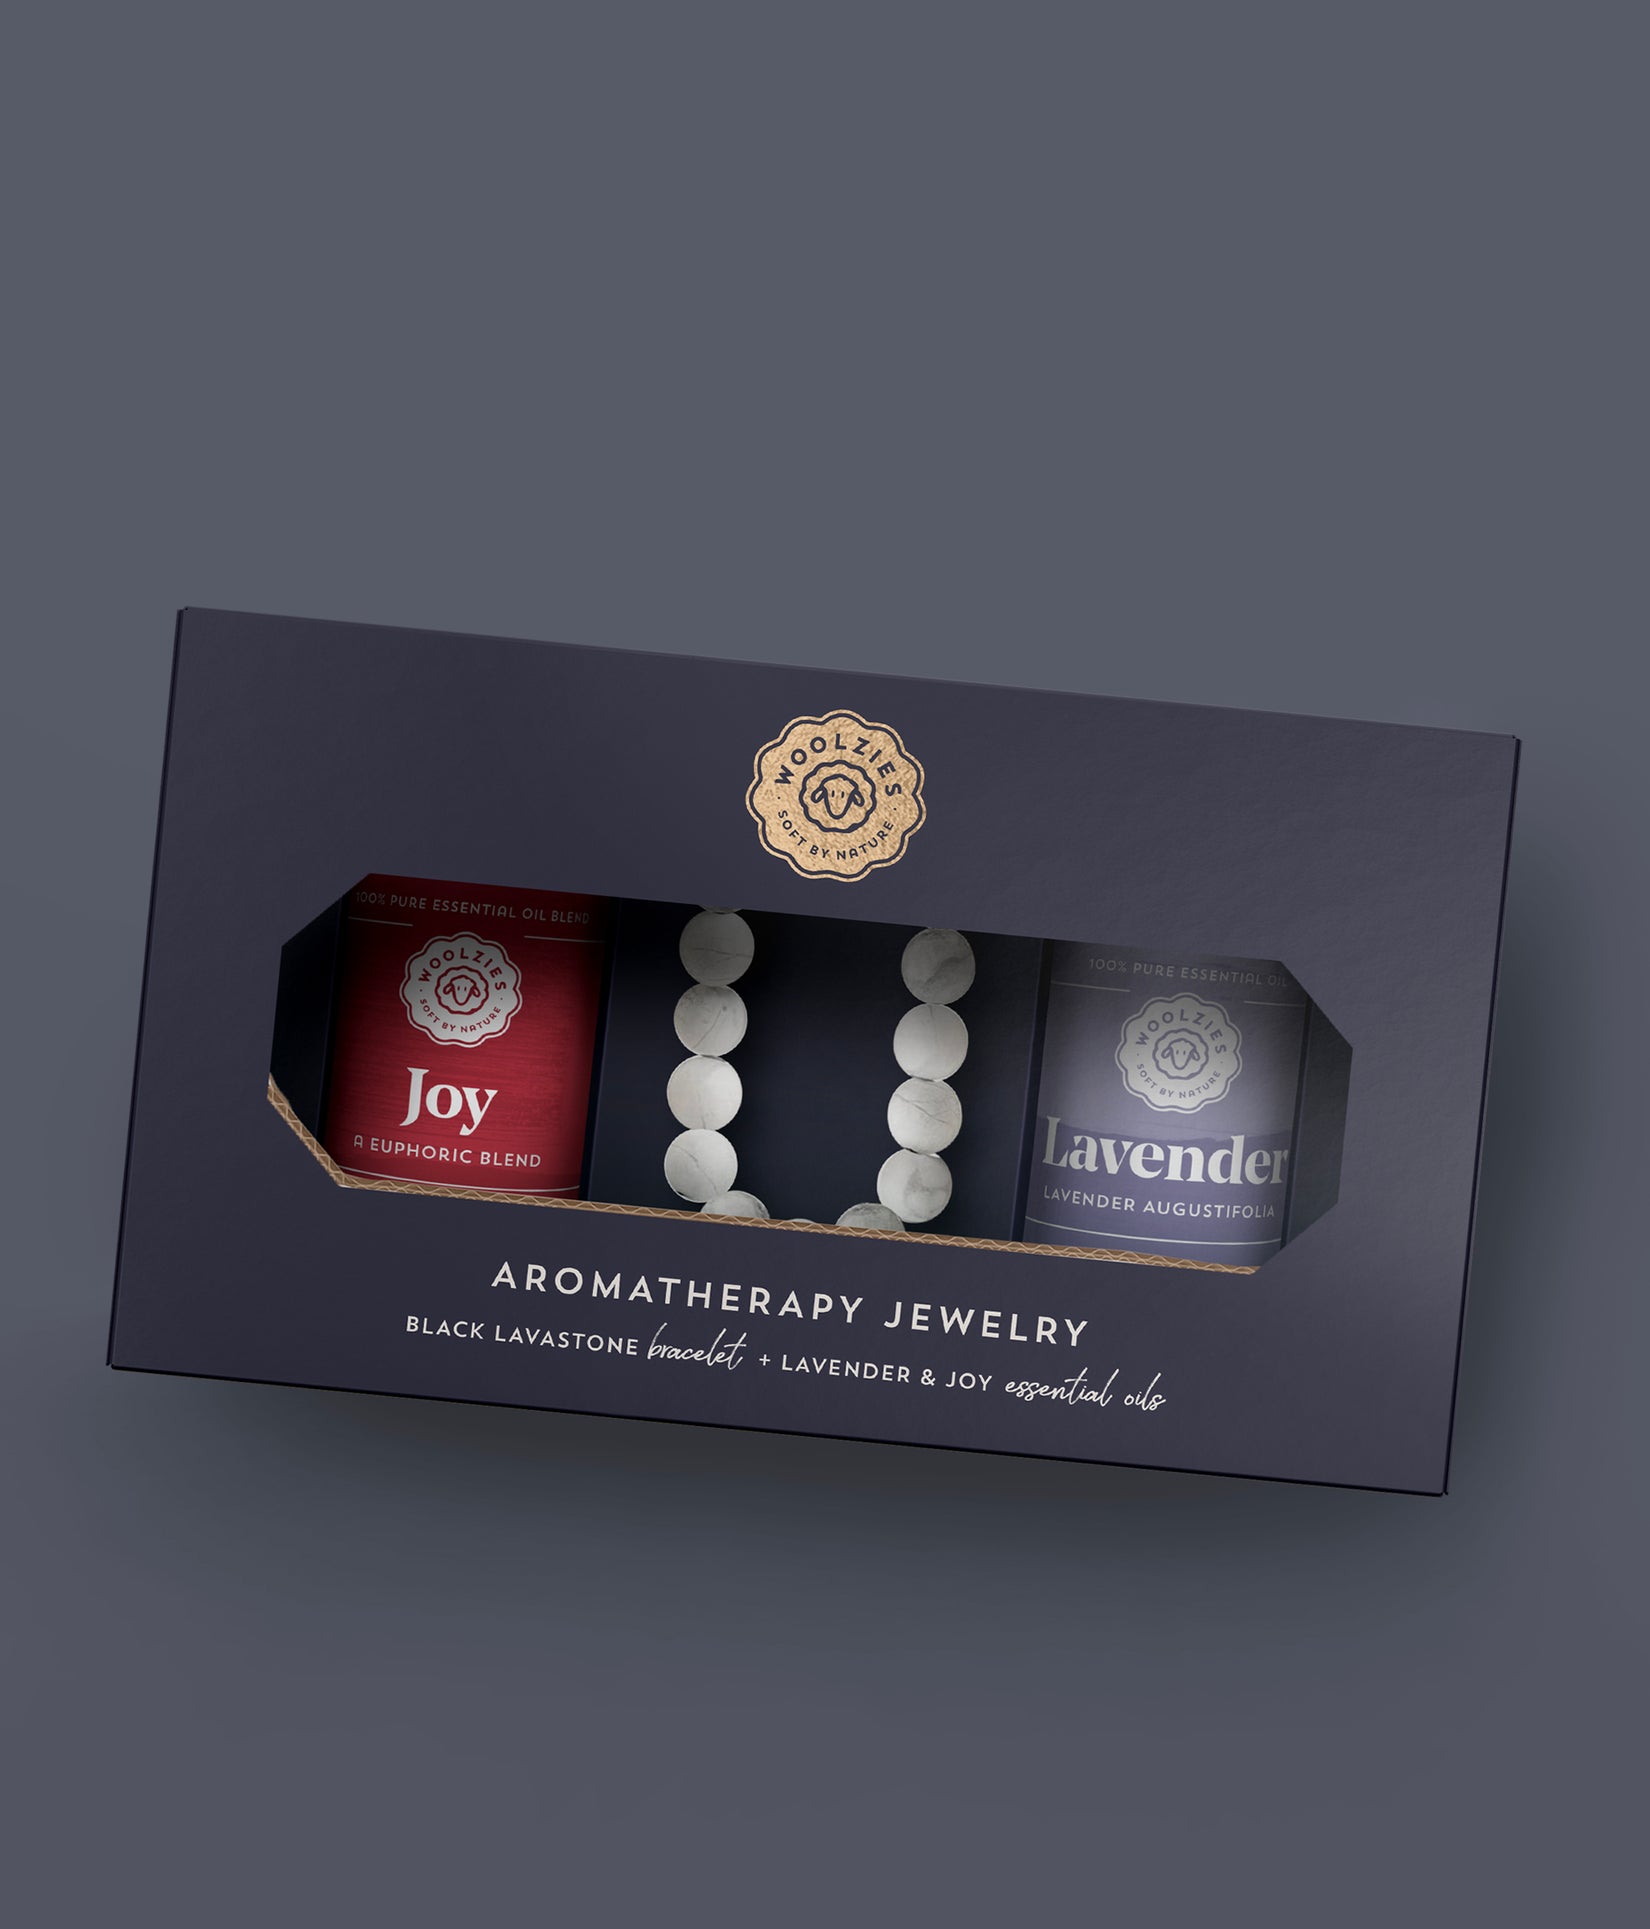 The Aromatherapy Jewelry Kit